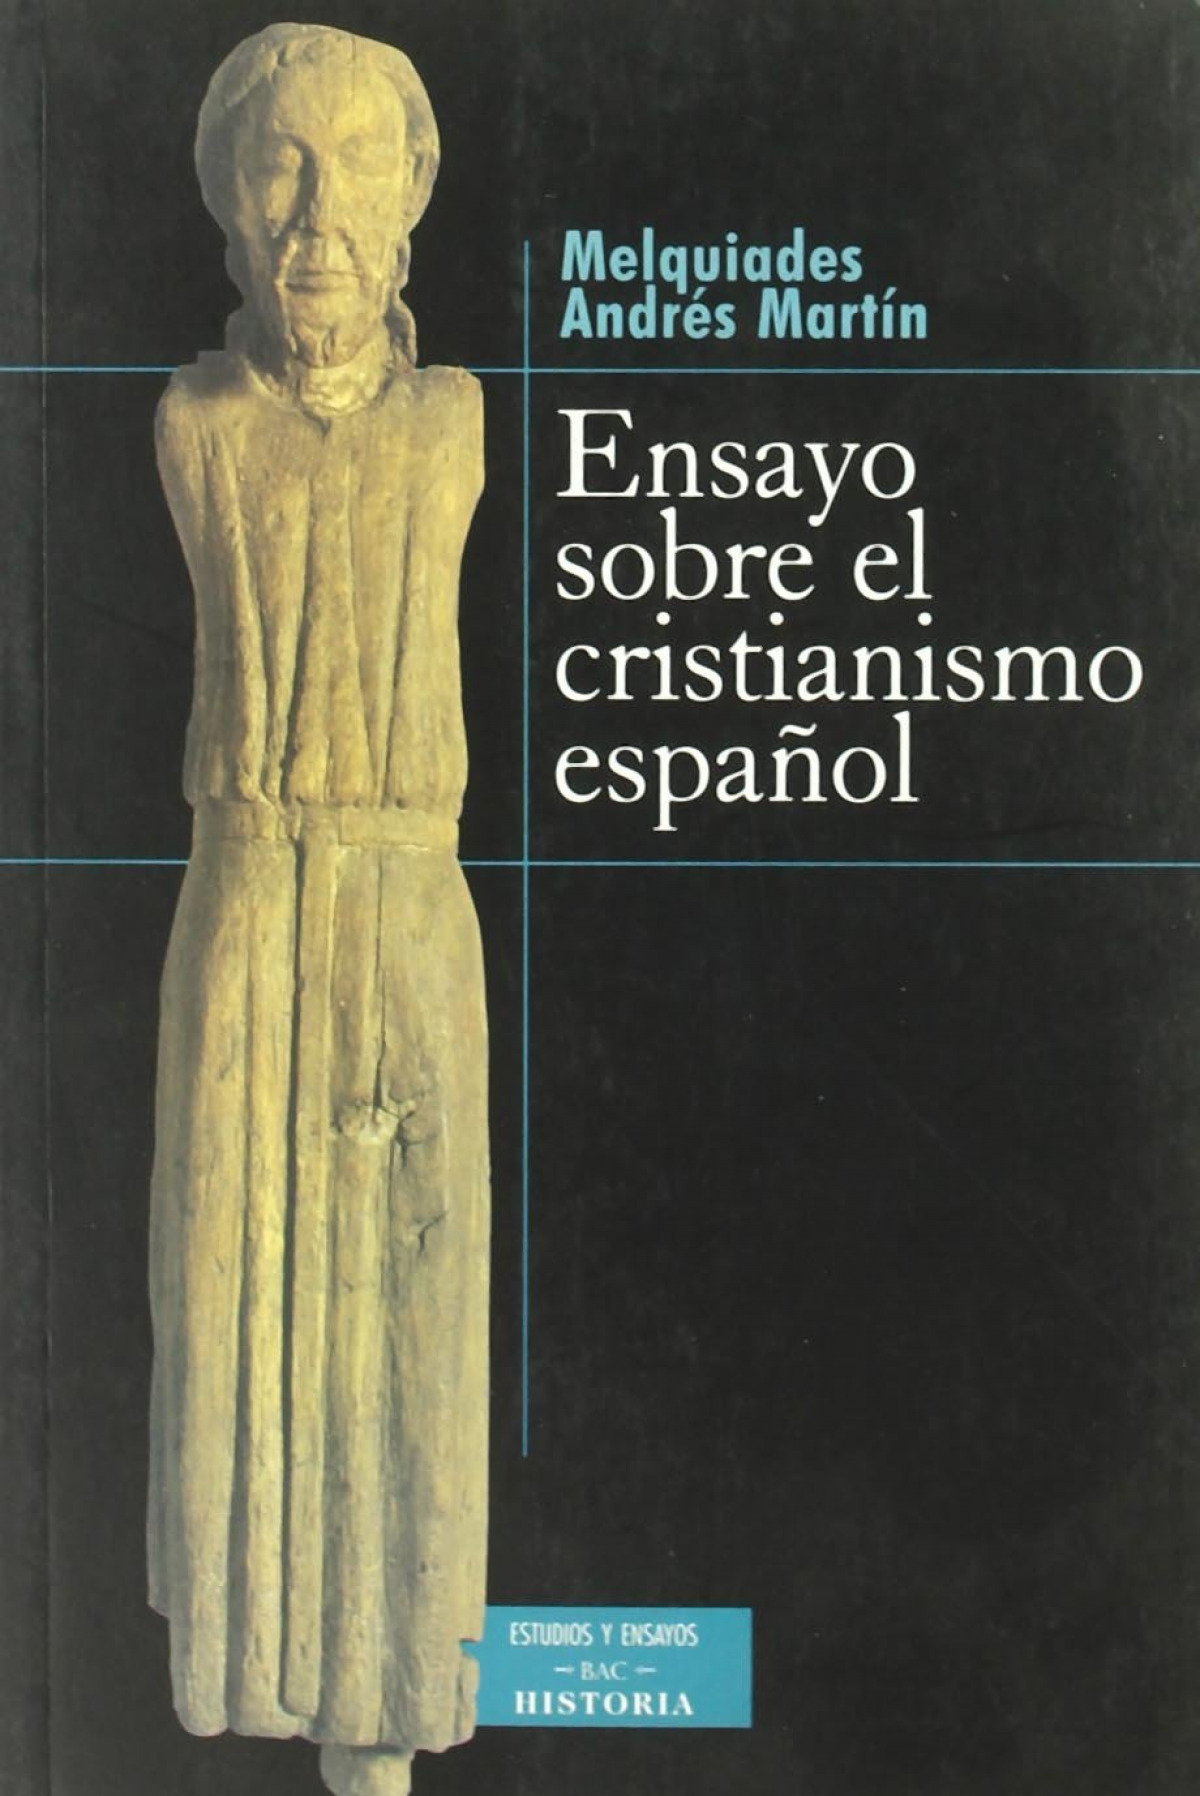 Ensayo sobre el cristianismo español - Andrés Martín, Melquiades